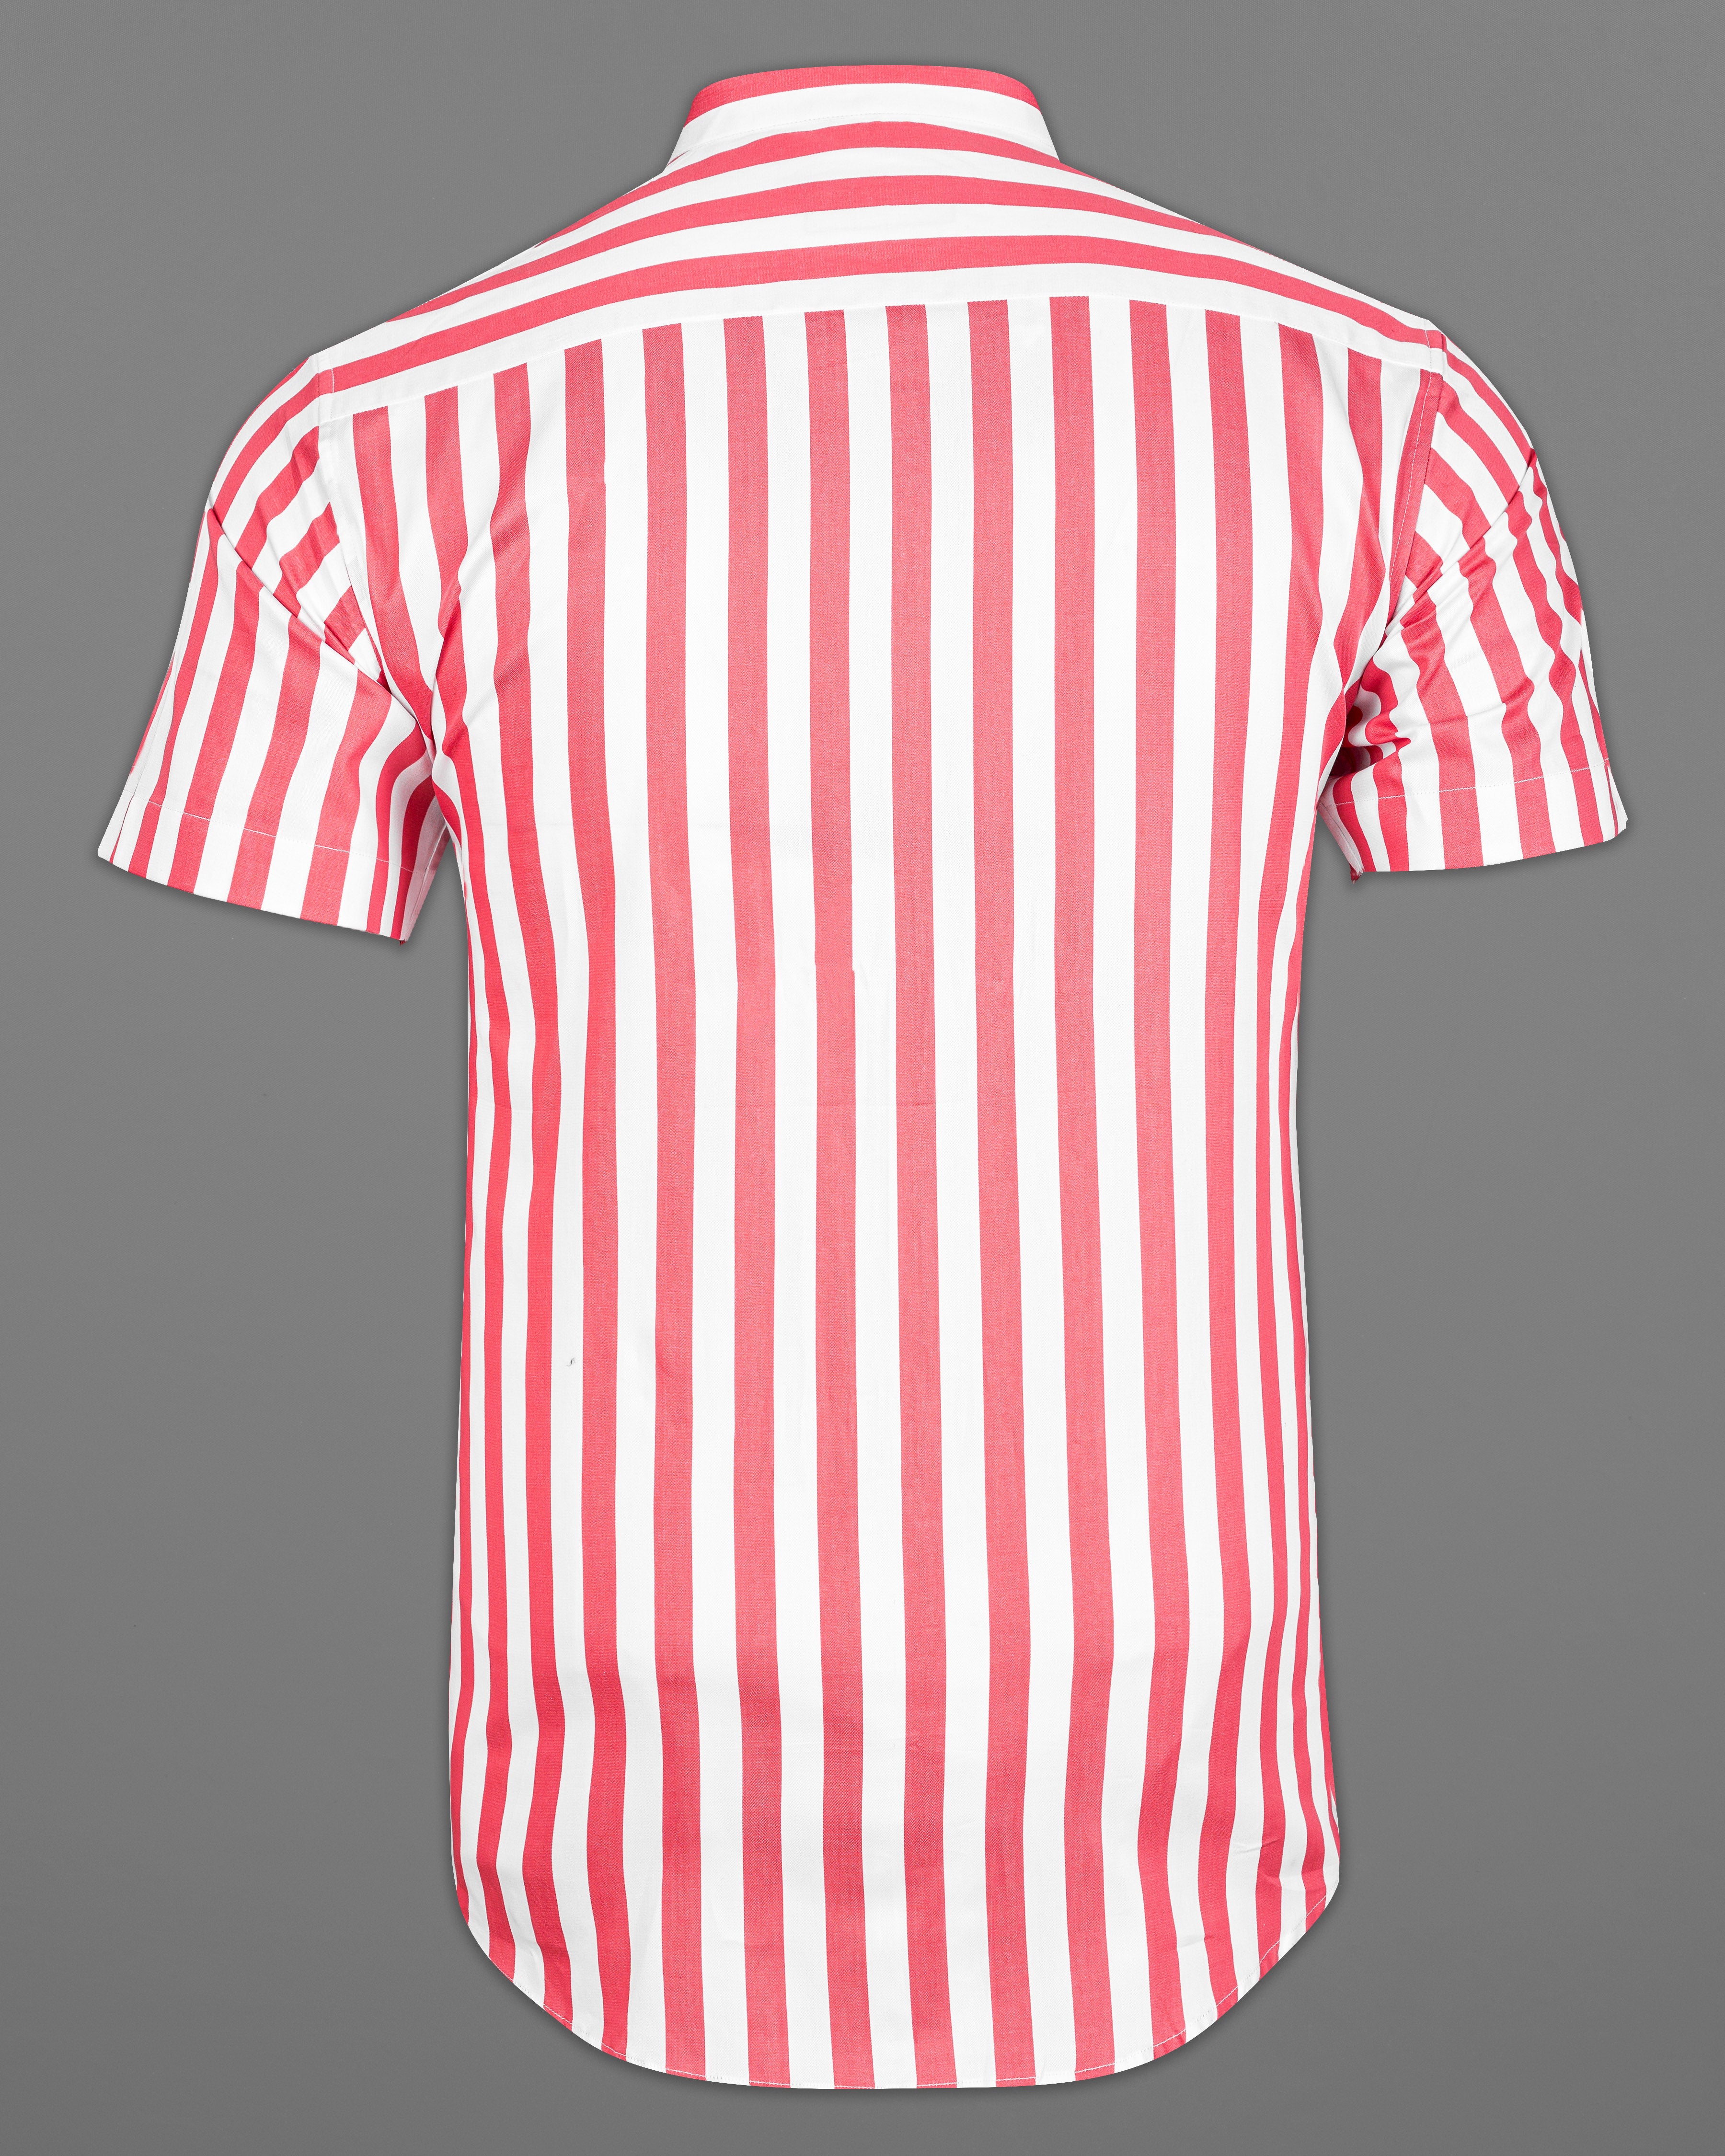 Geraldine Pink and White Striped Twill Premium Cotton Half Slavees Shirt 9645-M-BLK-SS-H-38, 9645-M-BLK-SS-H-39, 9645-M-BLK-SS-H-40, 9645-M-BLK-SS-H-42, 9645-M-BLK-SS-H-44, 9645-M-BLK-SS-H-46, 9645-M-BLK-SS-H-48, 9645-M-BLK-SS-H-50, 9645-M-BLK-SS-H-52